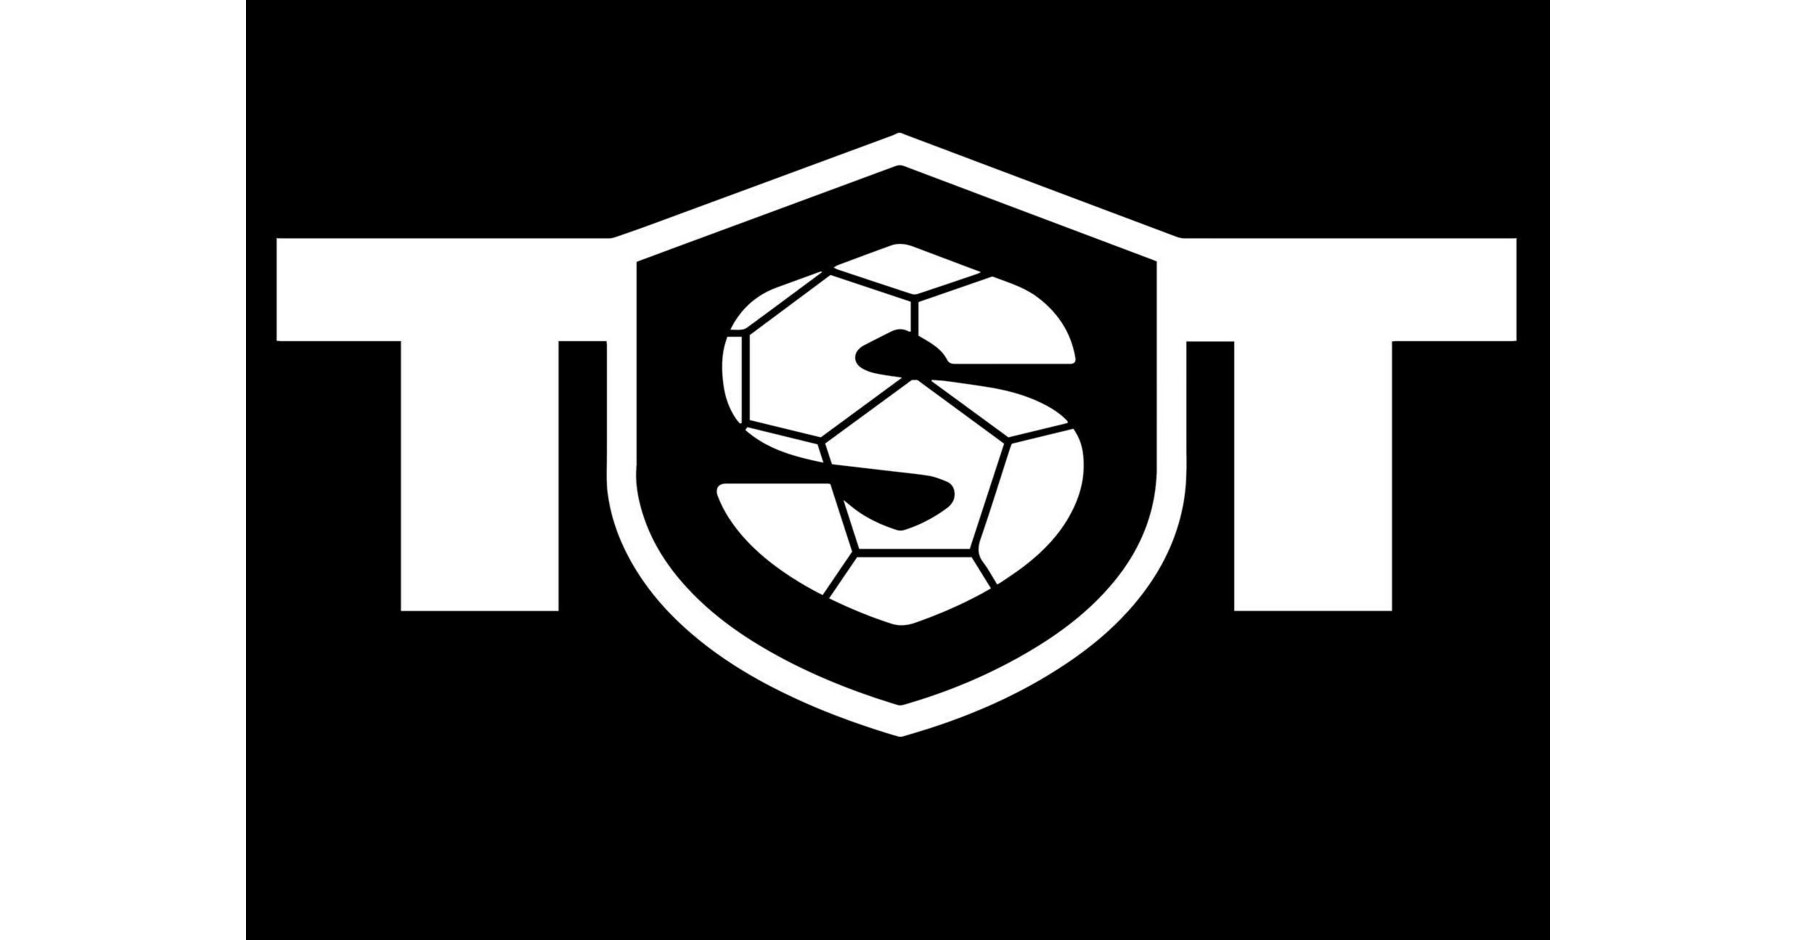 Soccer.com and The Soccer Tournament Partner on Groundbreaking Soccer Tournament